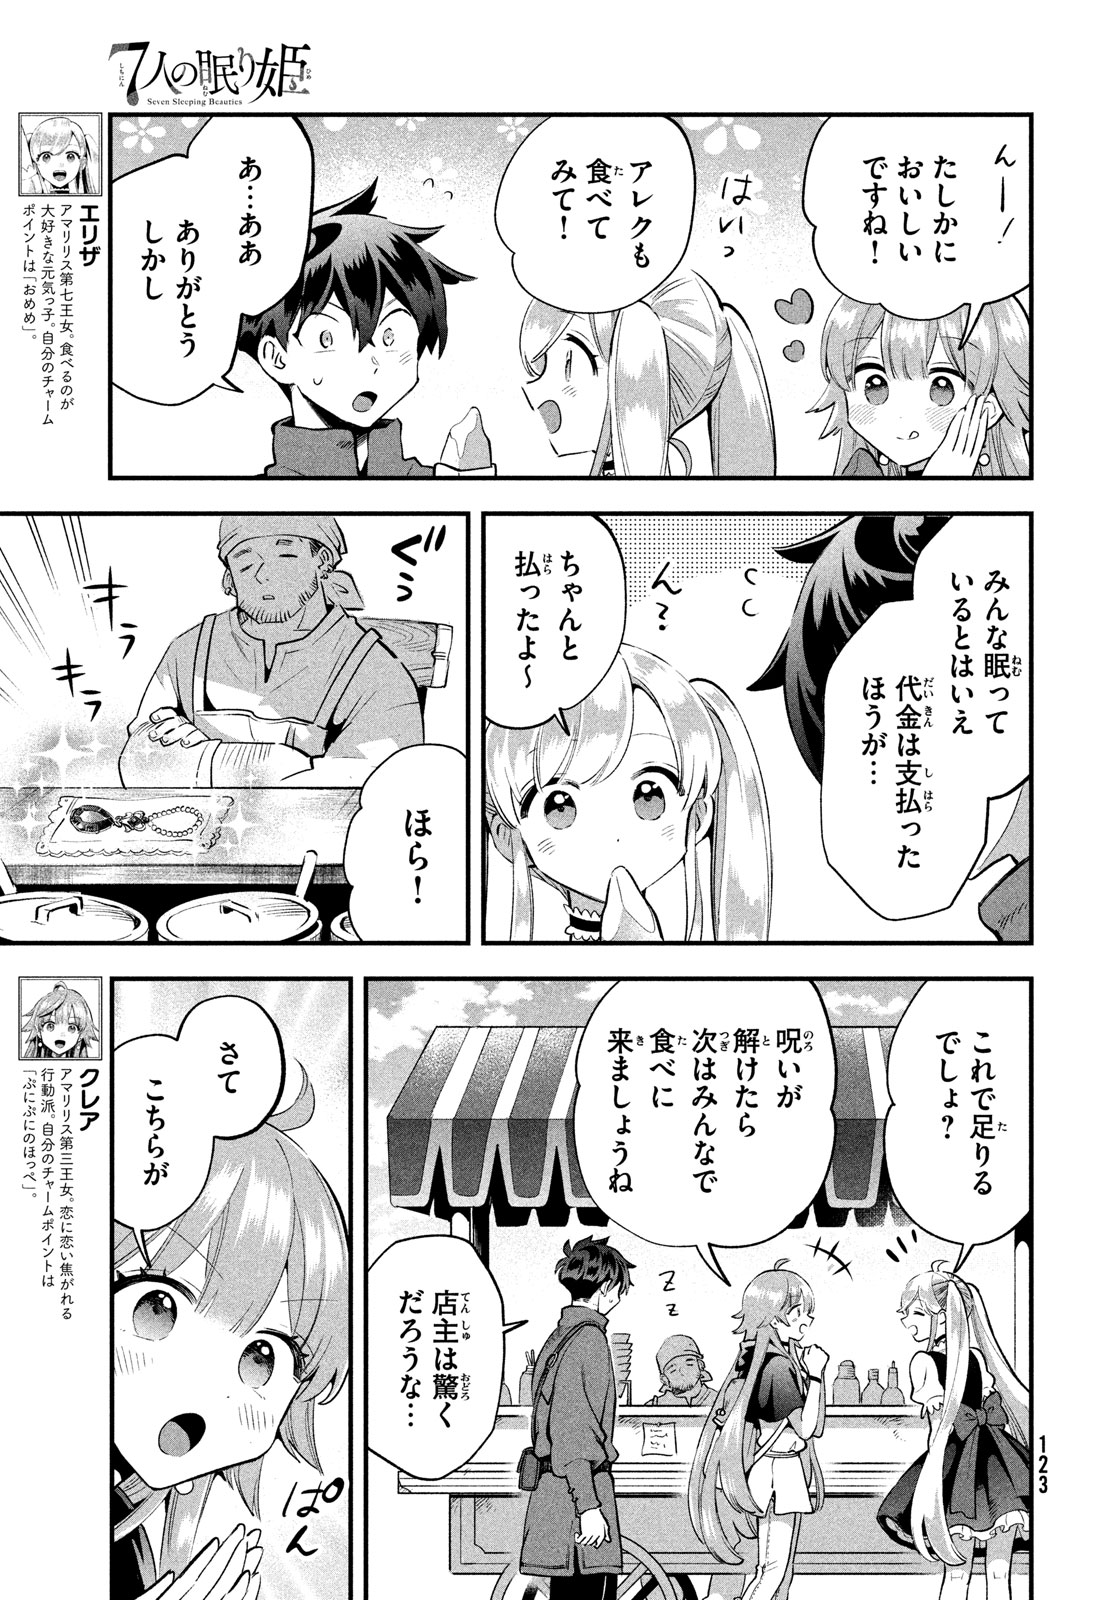 7-nin no Nemuri Hime - Chapter 41 - Page 3